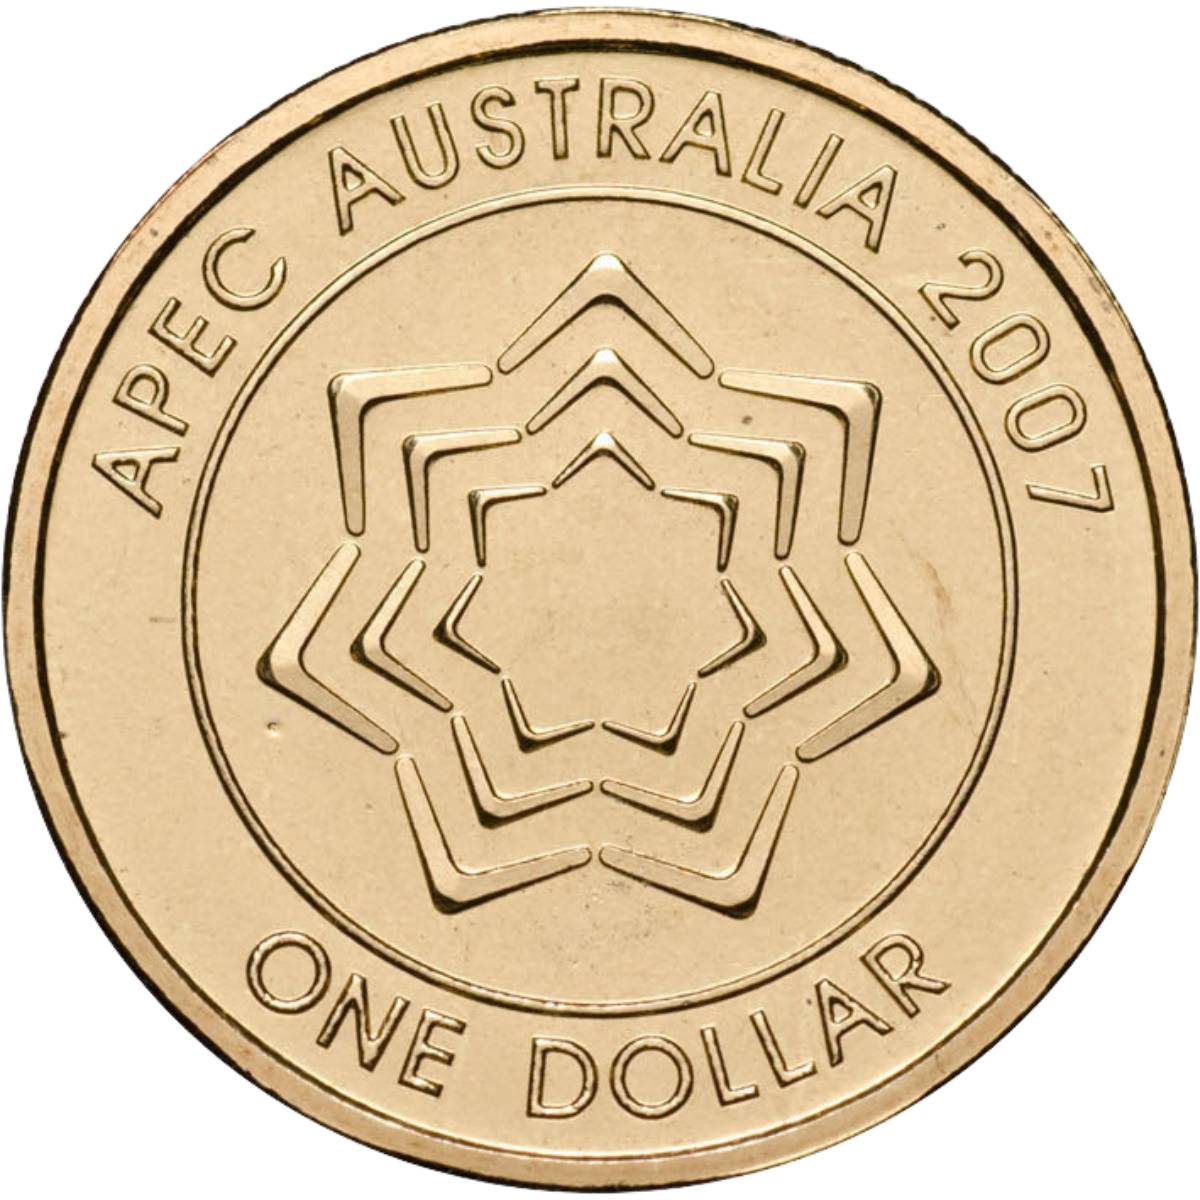 APEC Australia 2007 $1 Al-Br Coin Pack